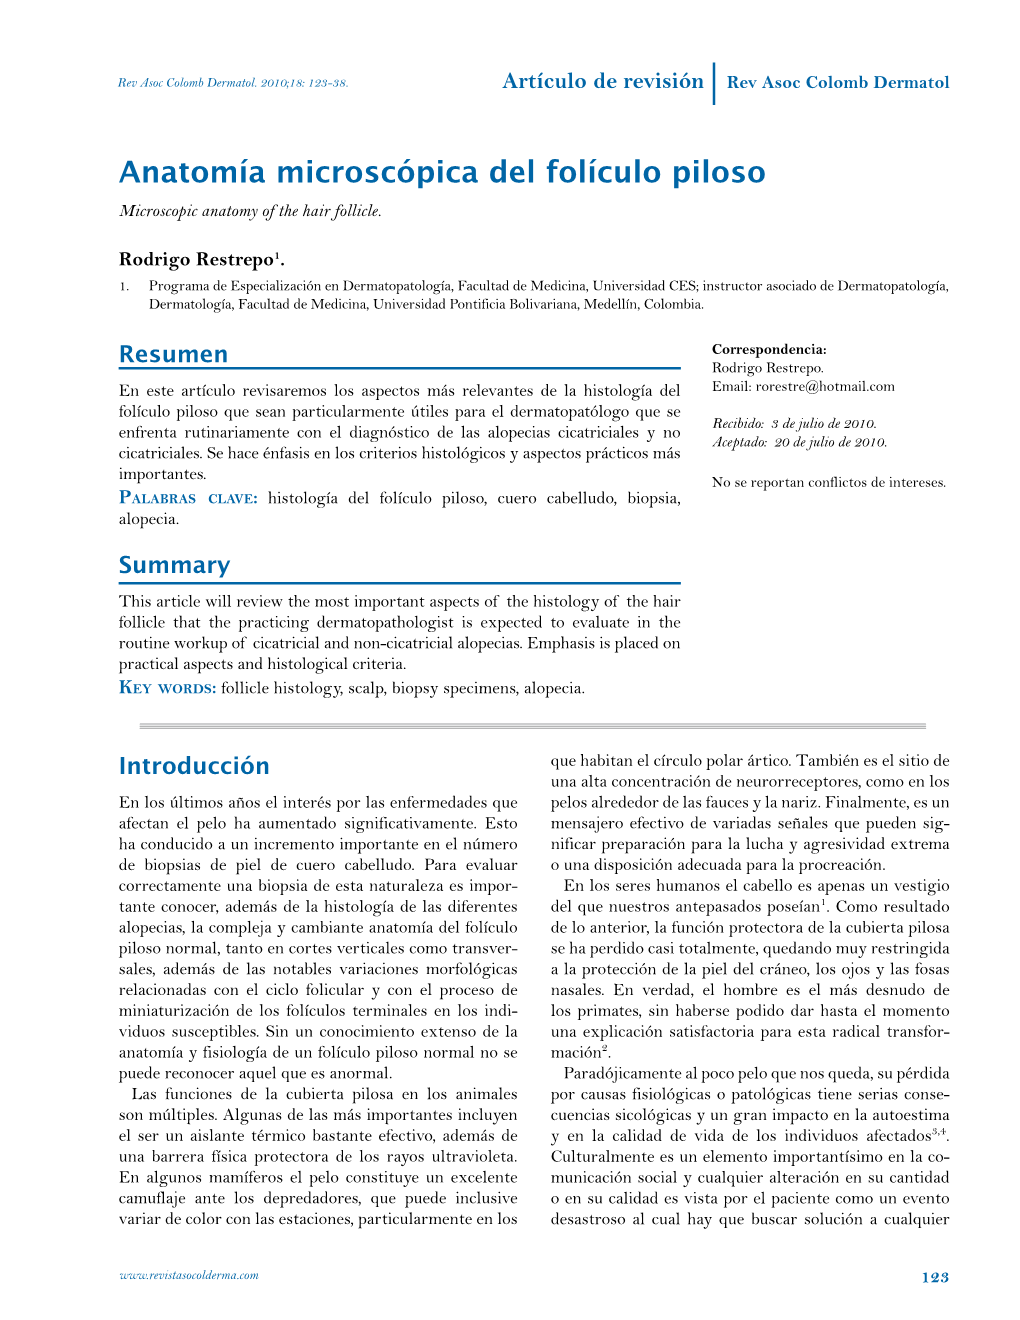 Anatomía Microscópica Del Folículo Piloso Microscopic Anatomy of the Hair Follicle